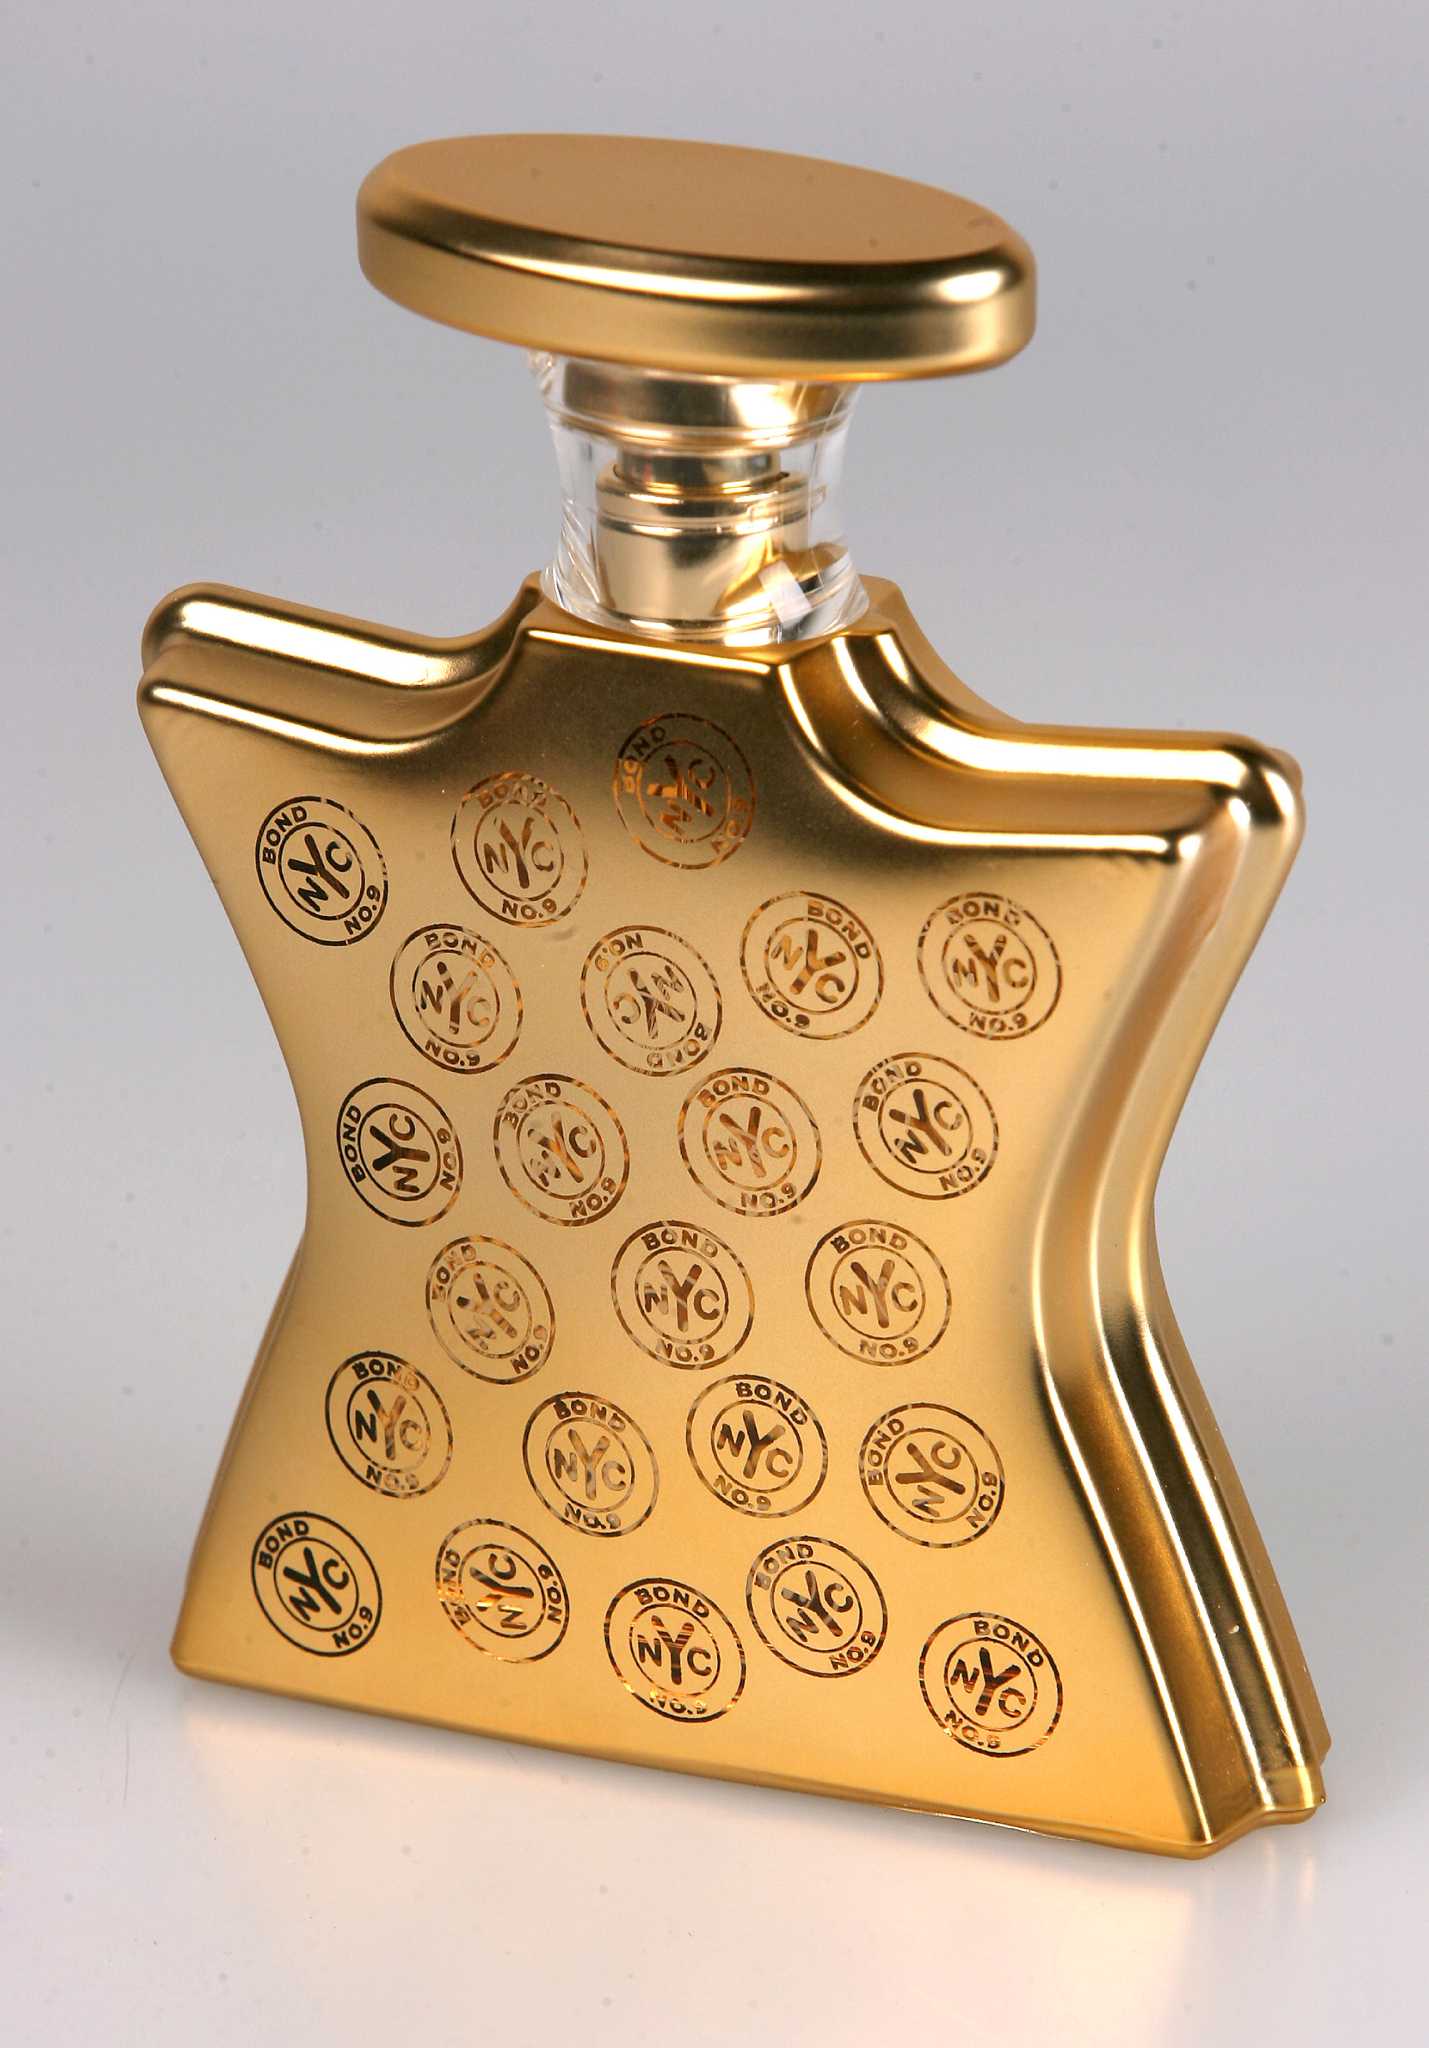 MIchael Kors logo bronze metallic doctor's bag, $328 at Dillards